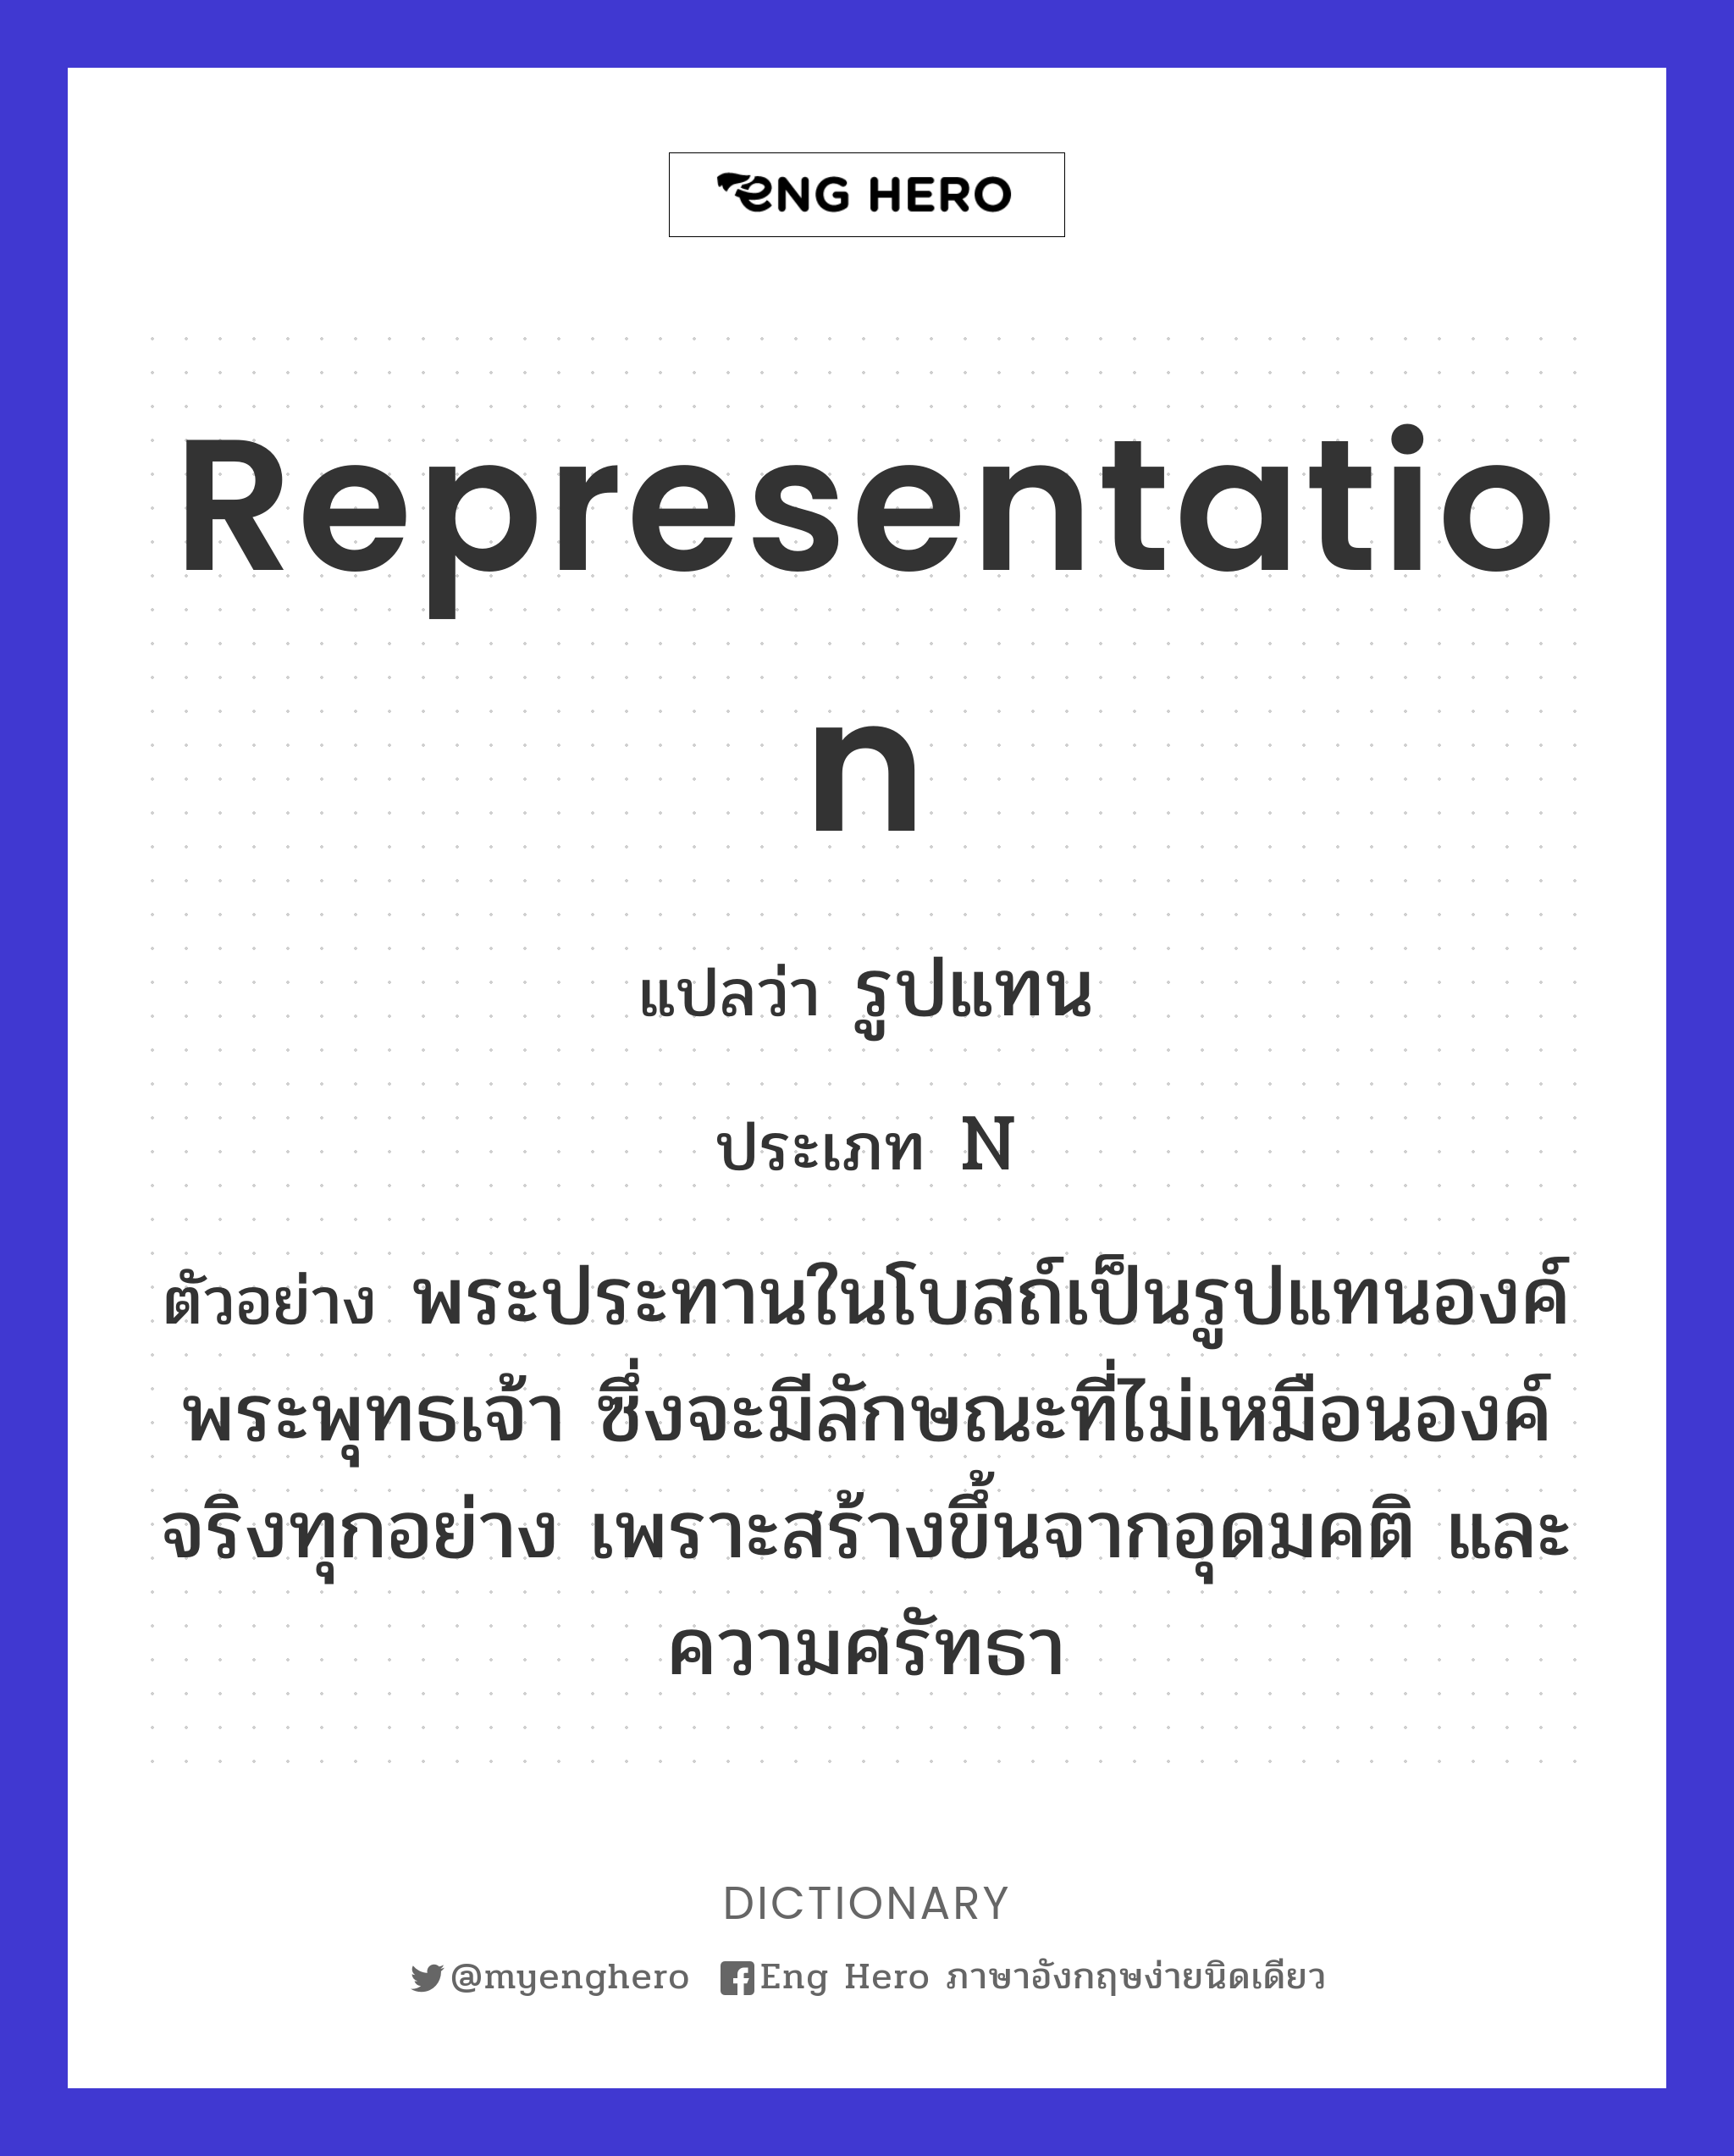 representation